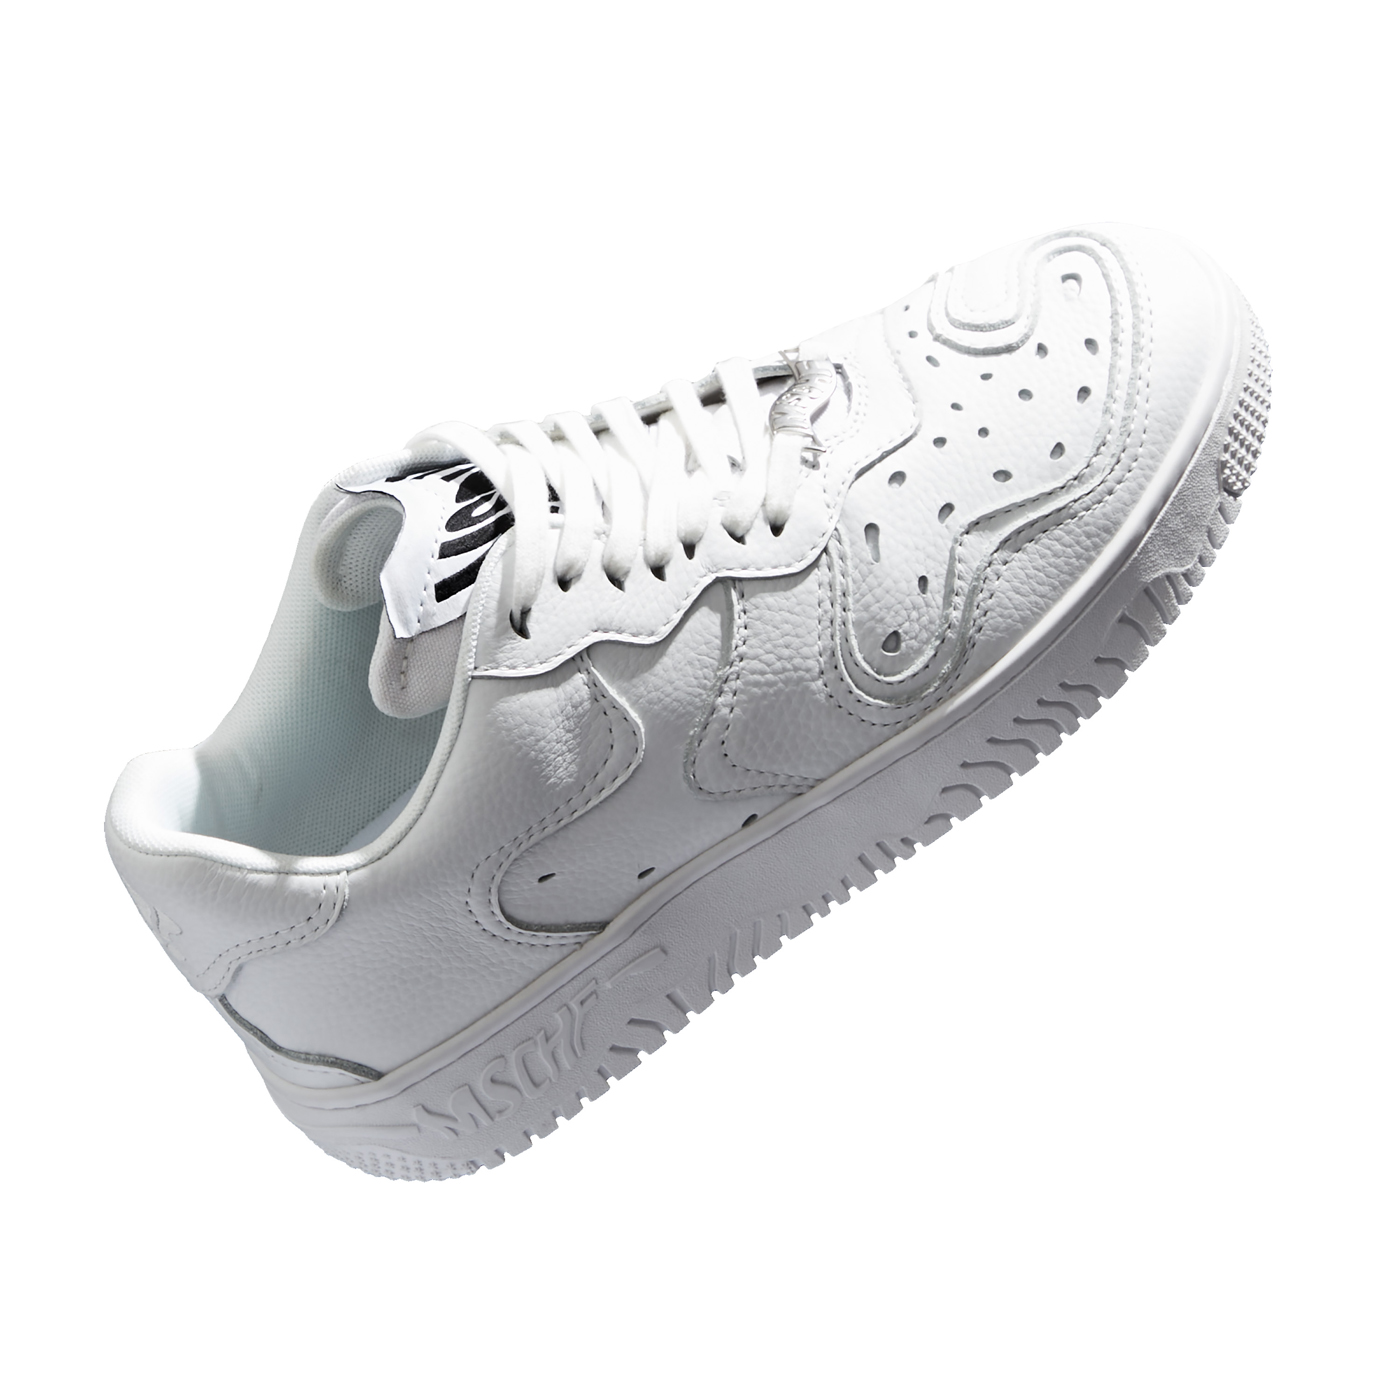 MSCHF's Super Normal 2 Sneaker Is Back in Crisp All-White